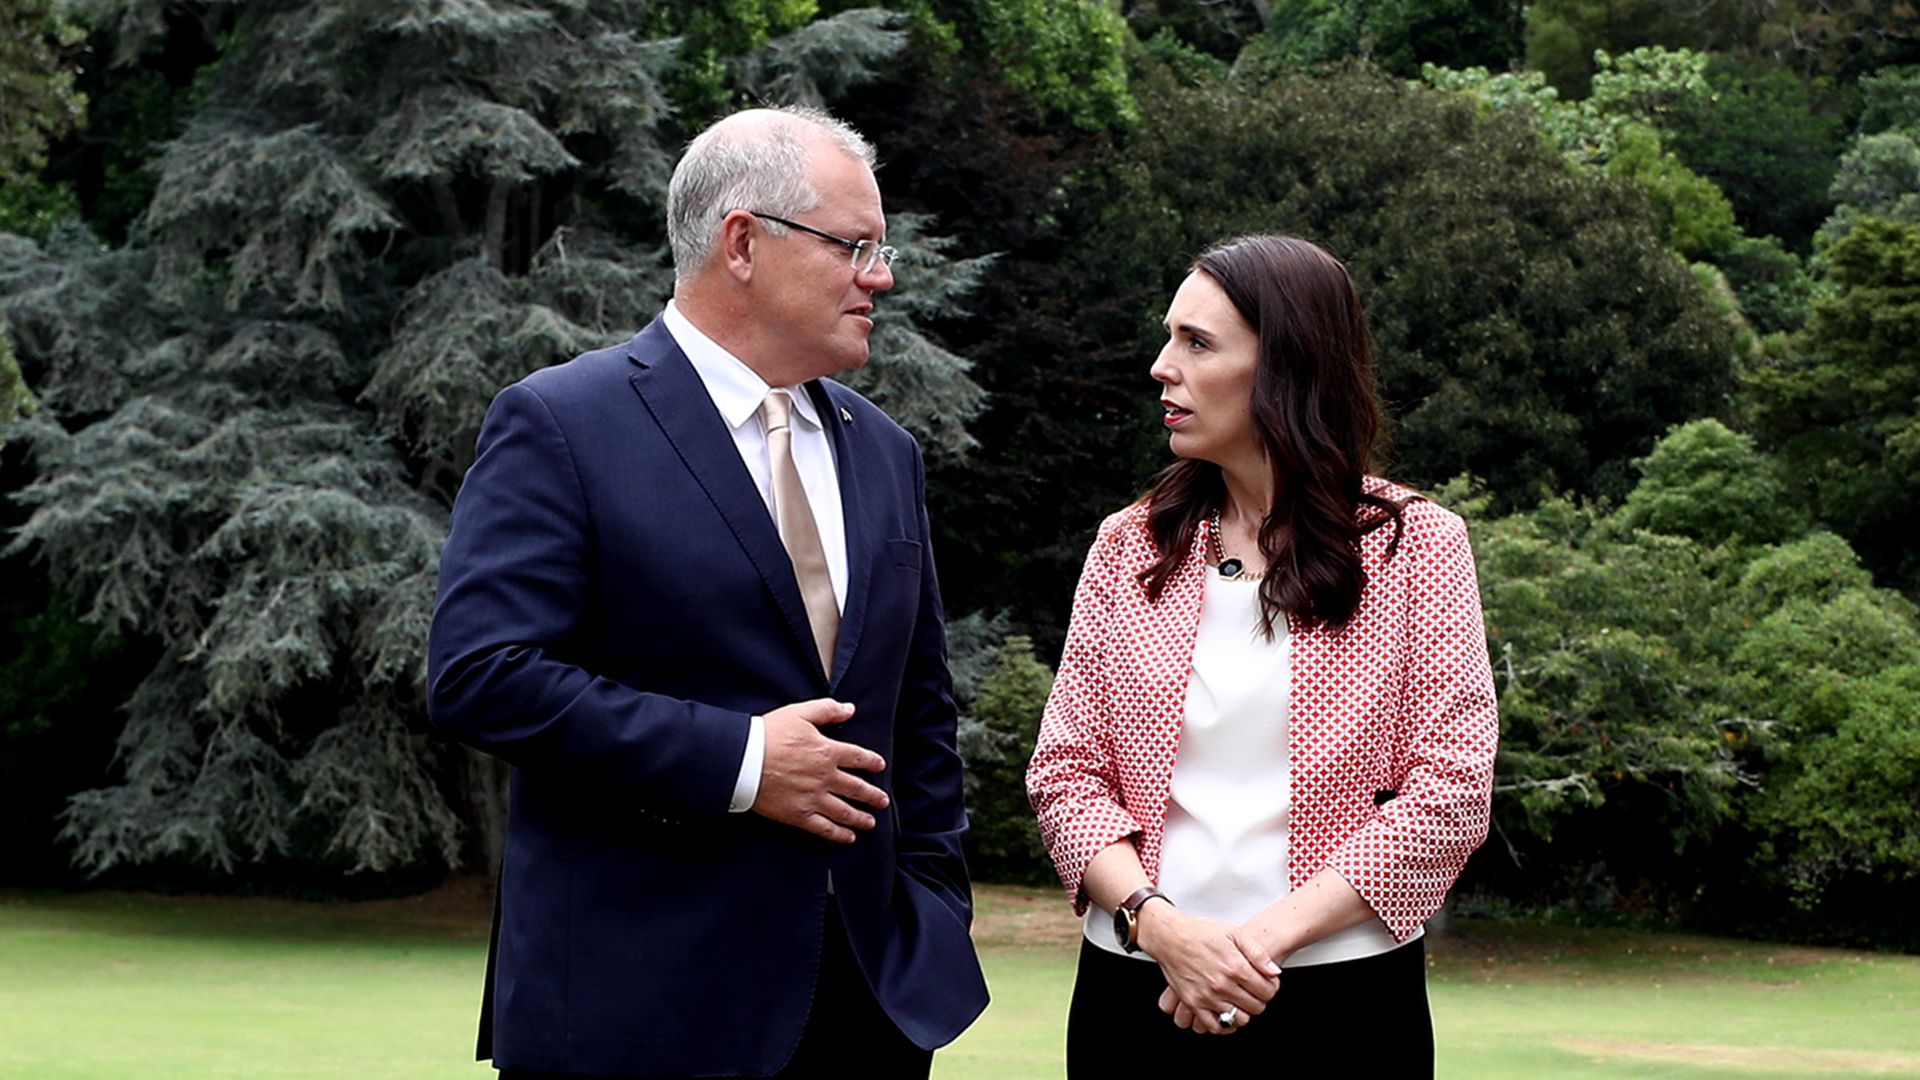 Australia's Prime Minister Scott Morrison and his New Zealand counterpart Jacinda Ardern both criticized the senator Sunday.